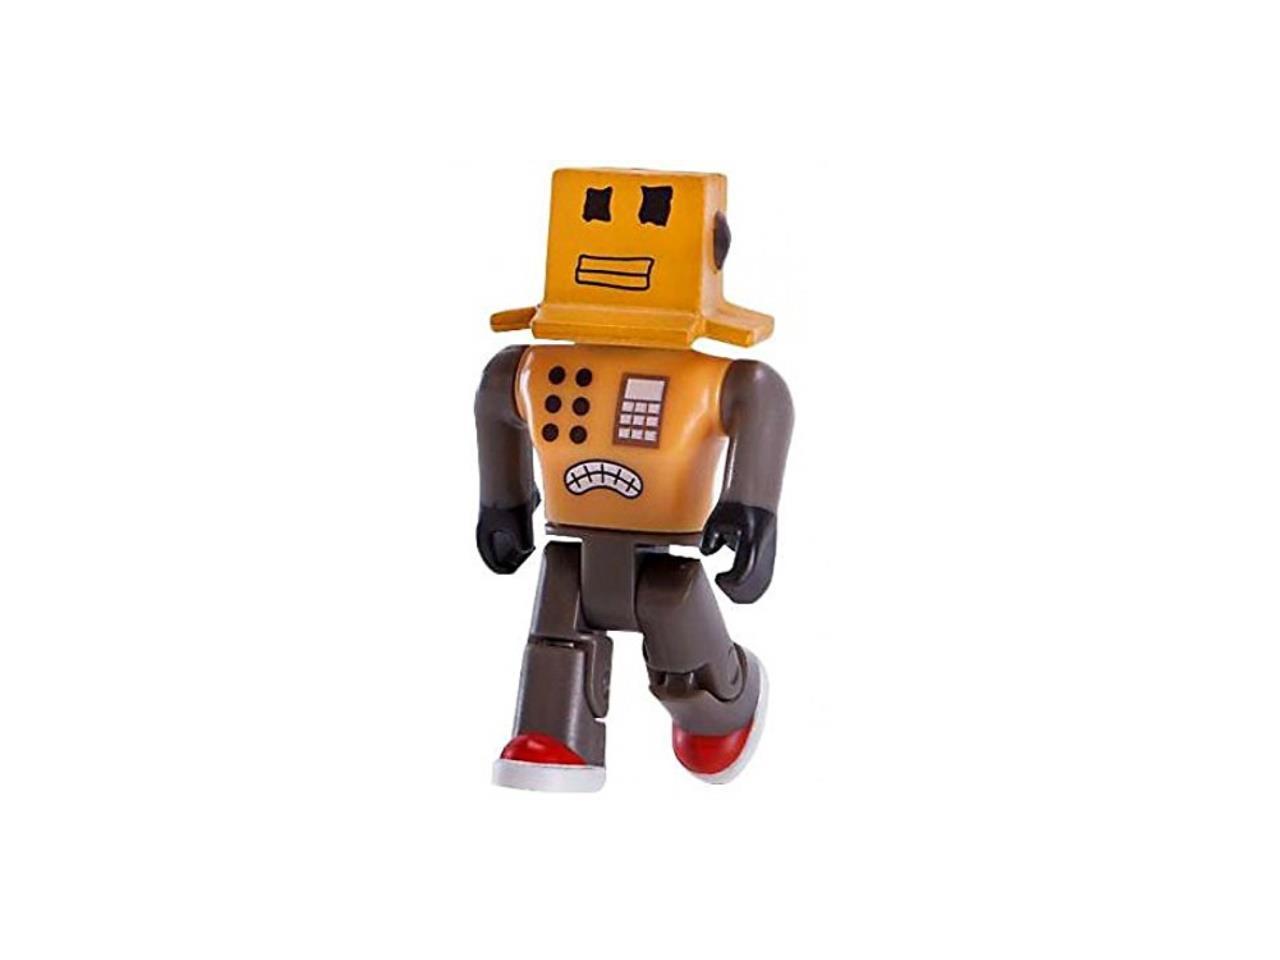 Roblox Series 1 Mr Robot Action Figure Mystery Box Virtual Item Code 2 5 Newegg Com - roblox series 1 action figure sealed mystery box w accessories checklist code